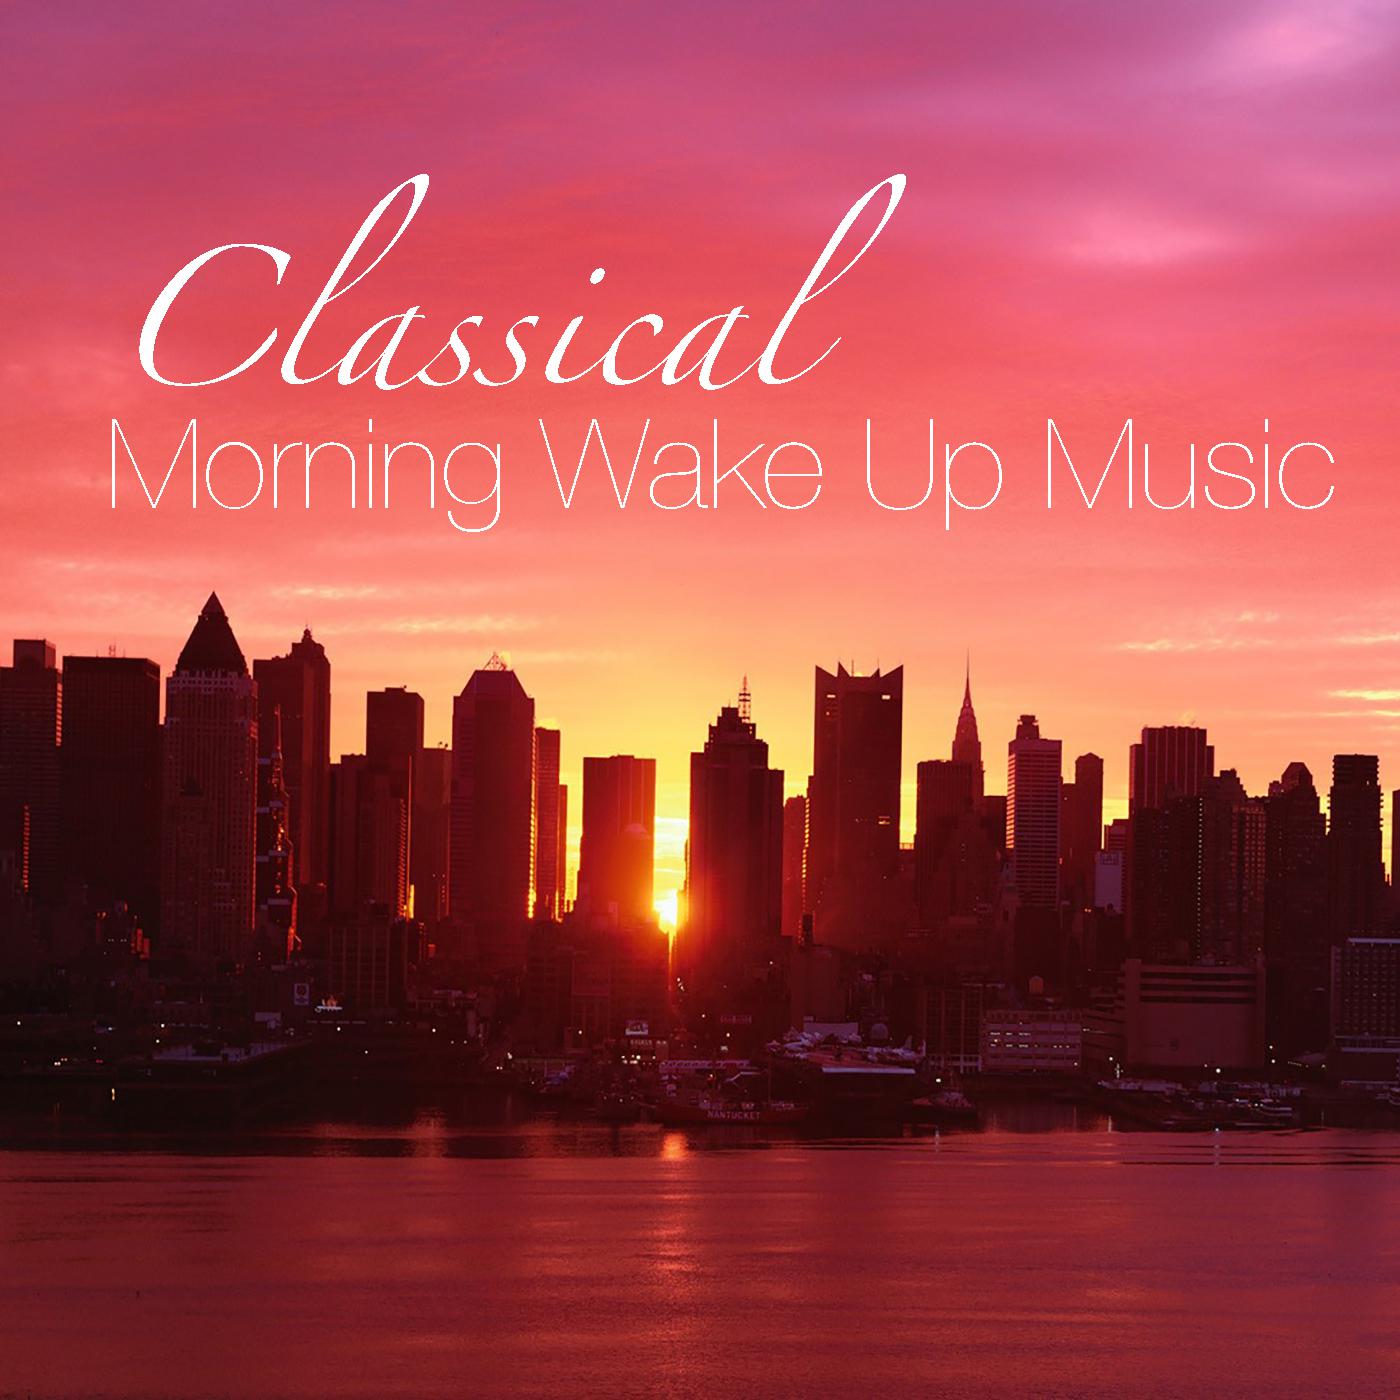 Classical Morning Wake Up Music